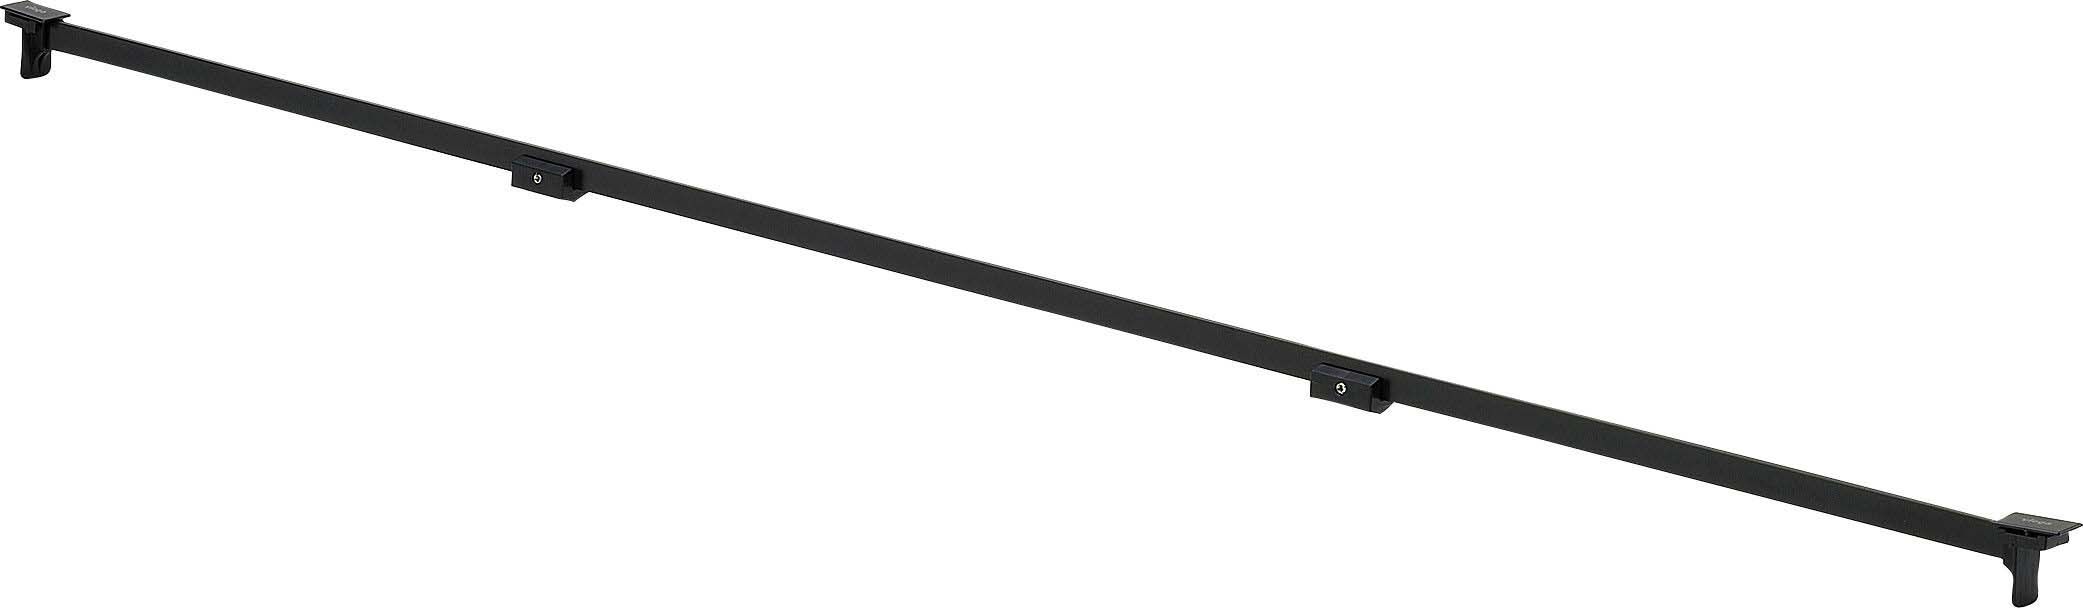 Viega Advantix Vario-Stegrost 711870 Ausführung schwarz, 300 - 1200 mm lang, 4965.32